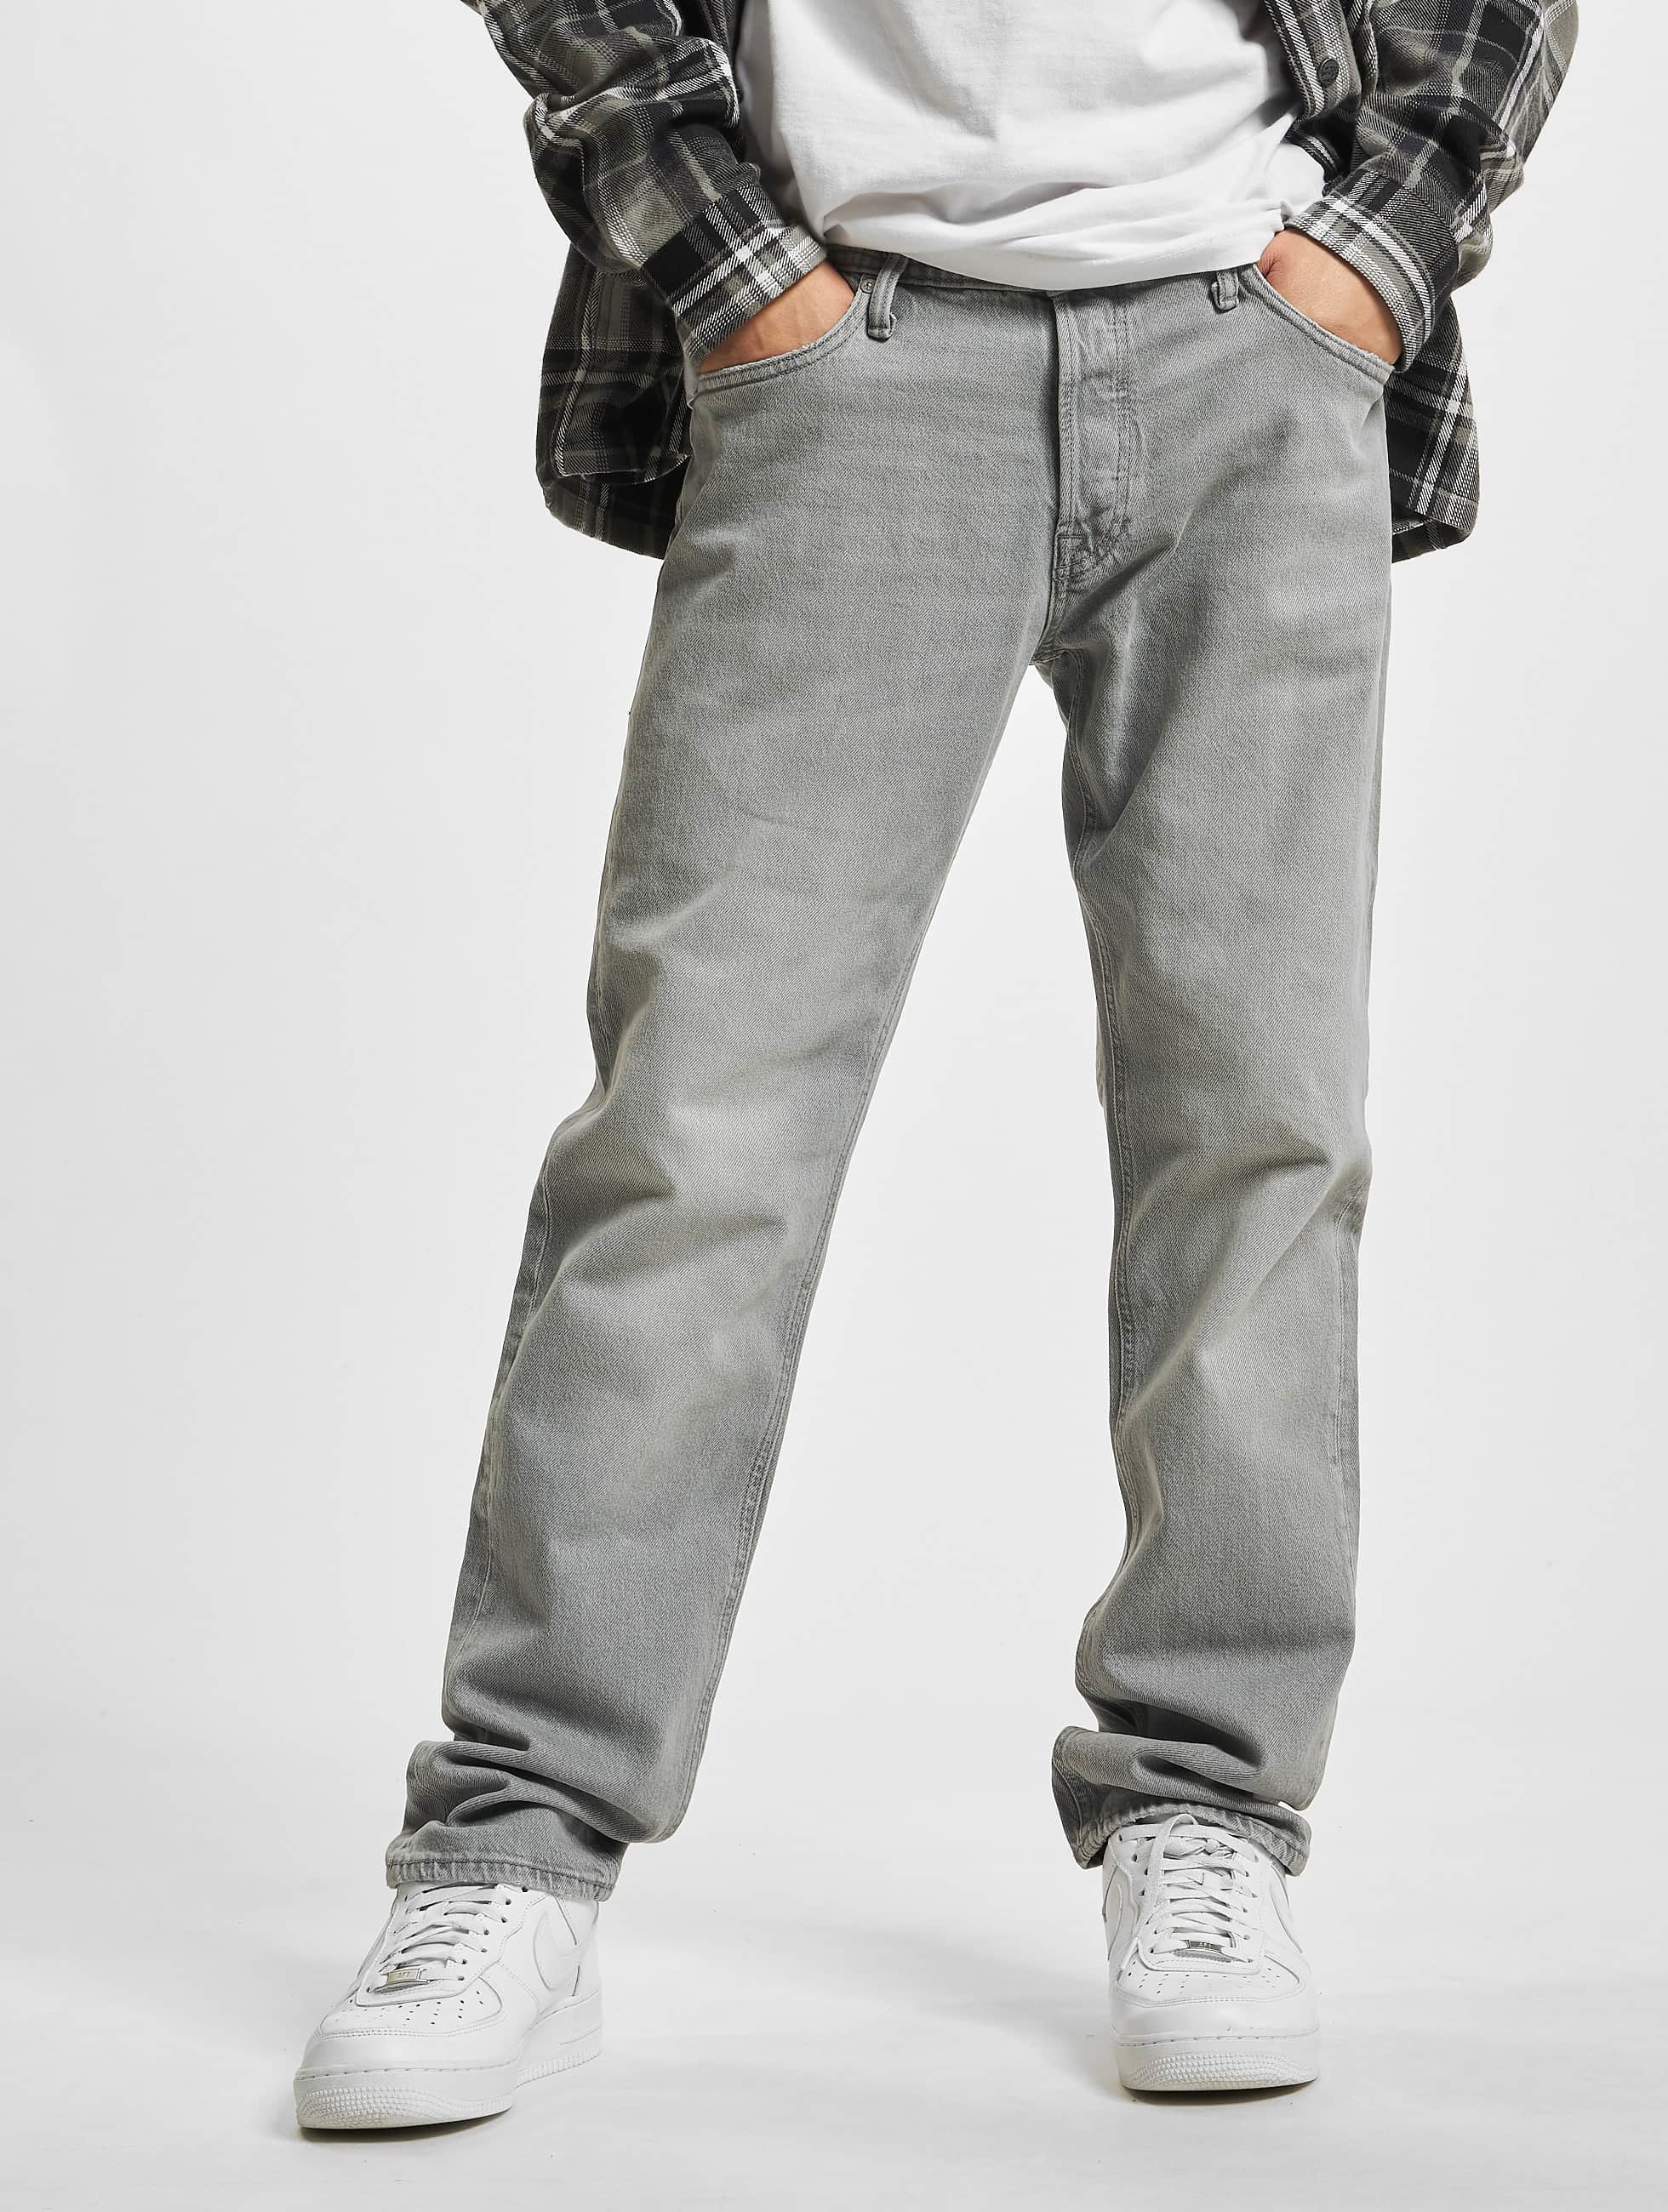 Jack & Jeans / Slim Fit Jeans Mike Original in grijs 941170